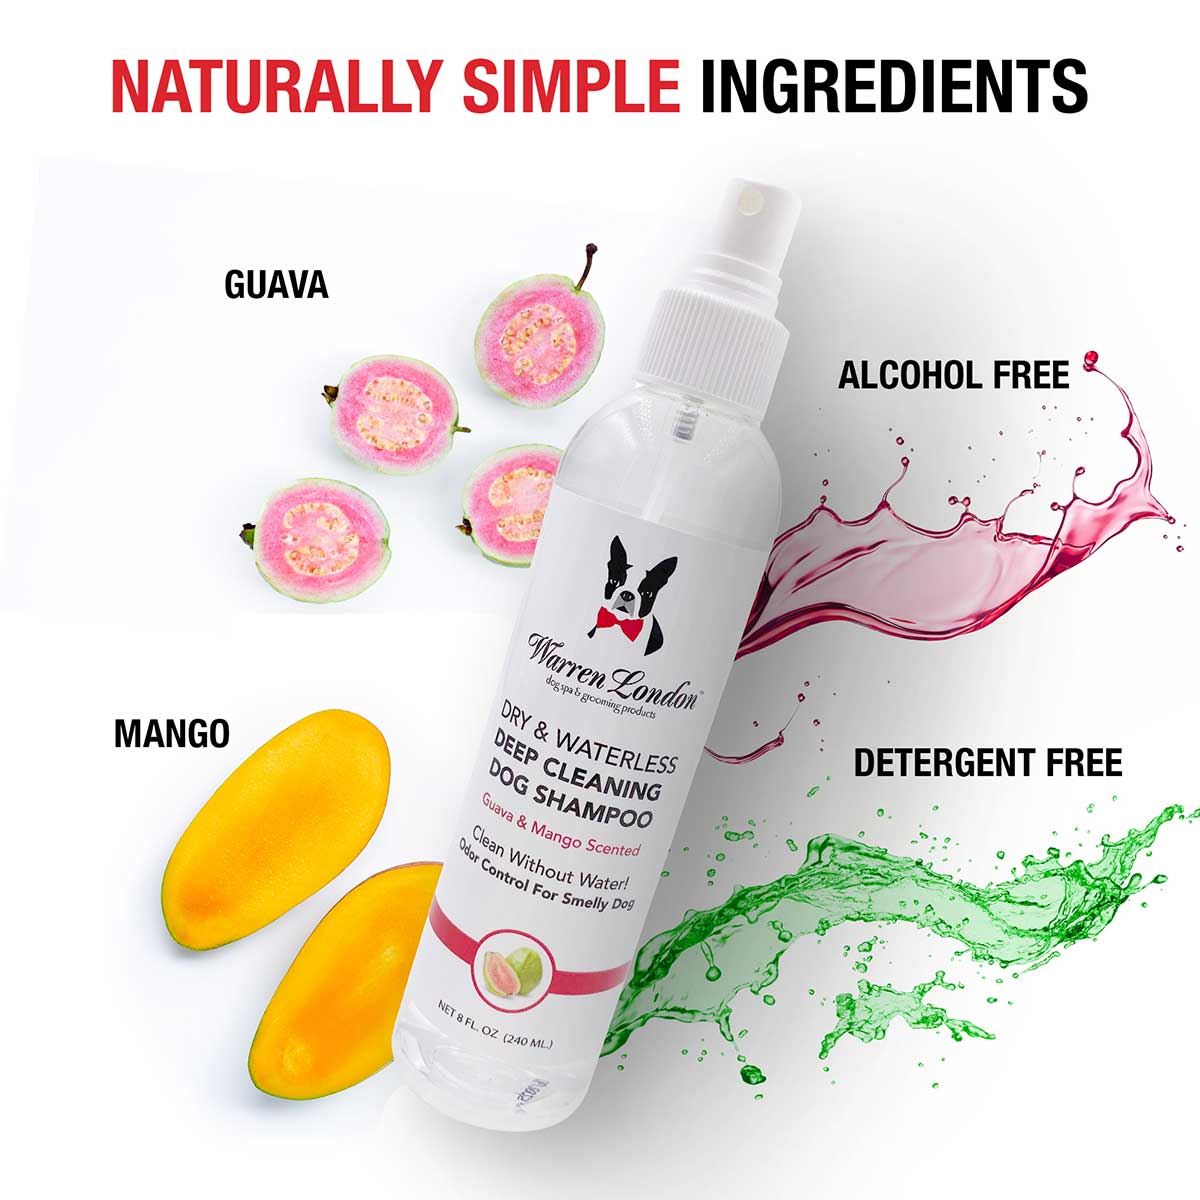 Warren London Dry & Waterless Deep Cleaning Shampoo - Guava & Mango | Pawlicious & Company